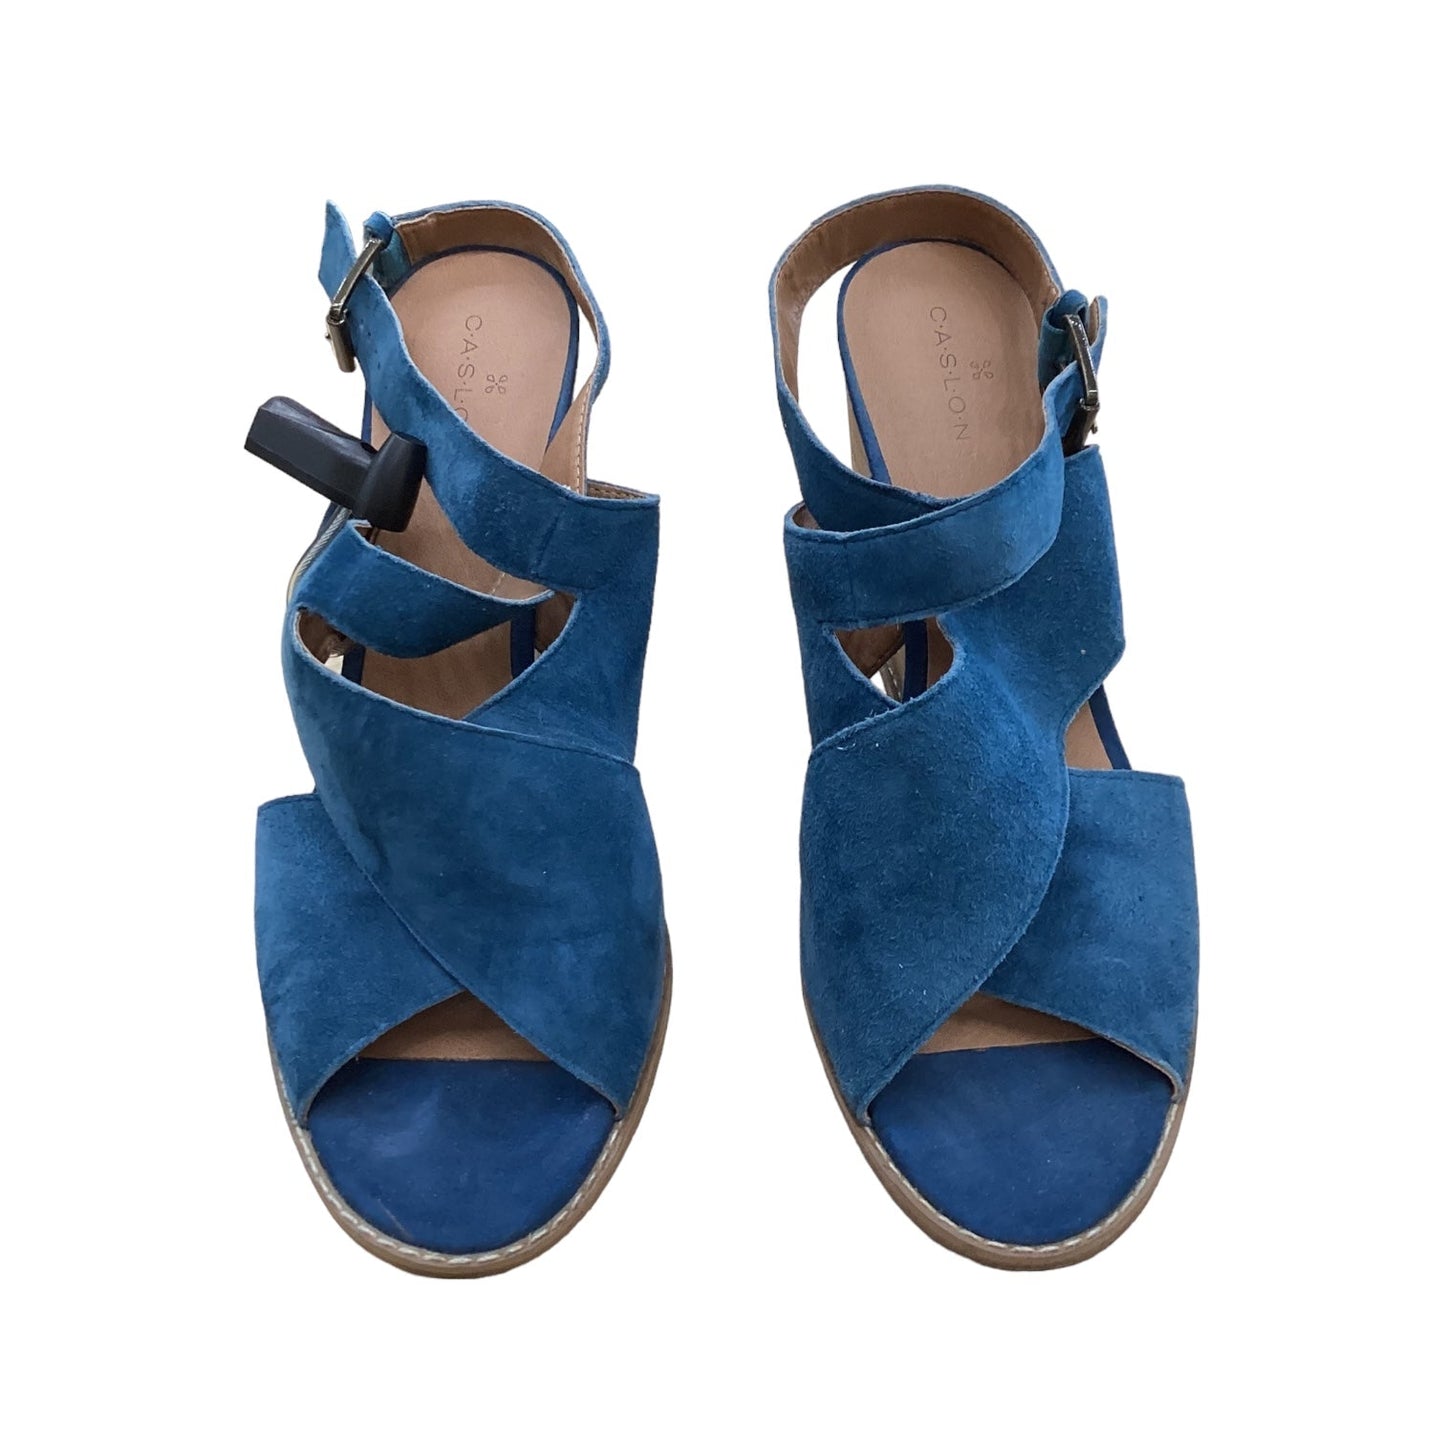 Blue Shoes Heels Wedge Caslon, Size 8